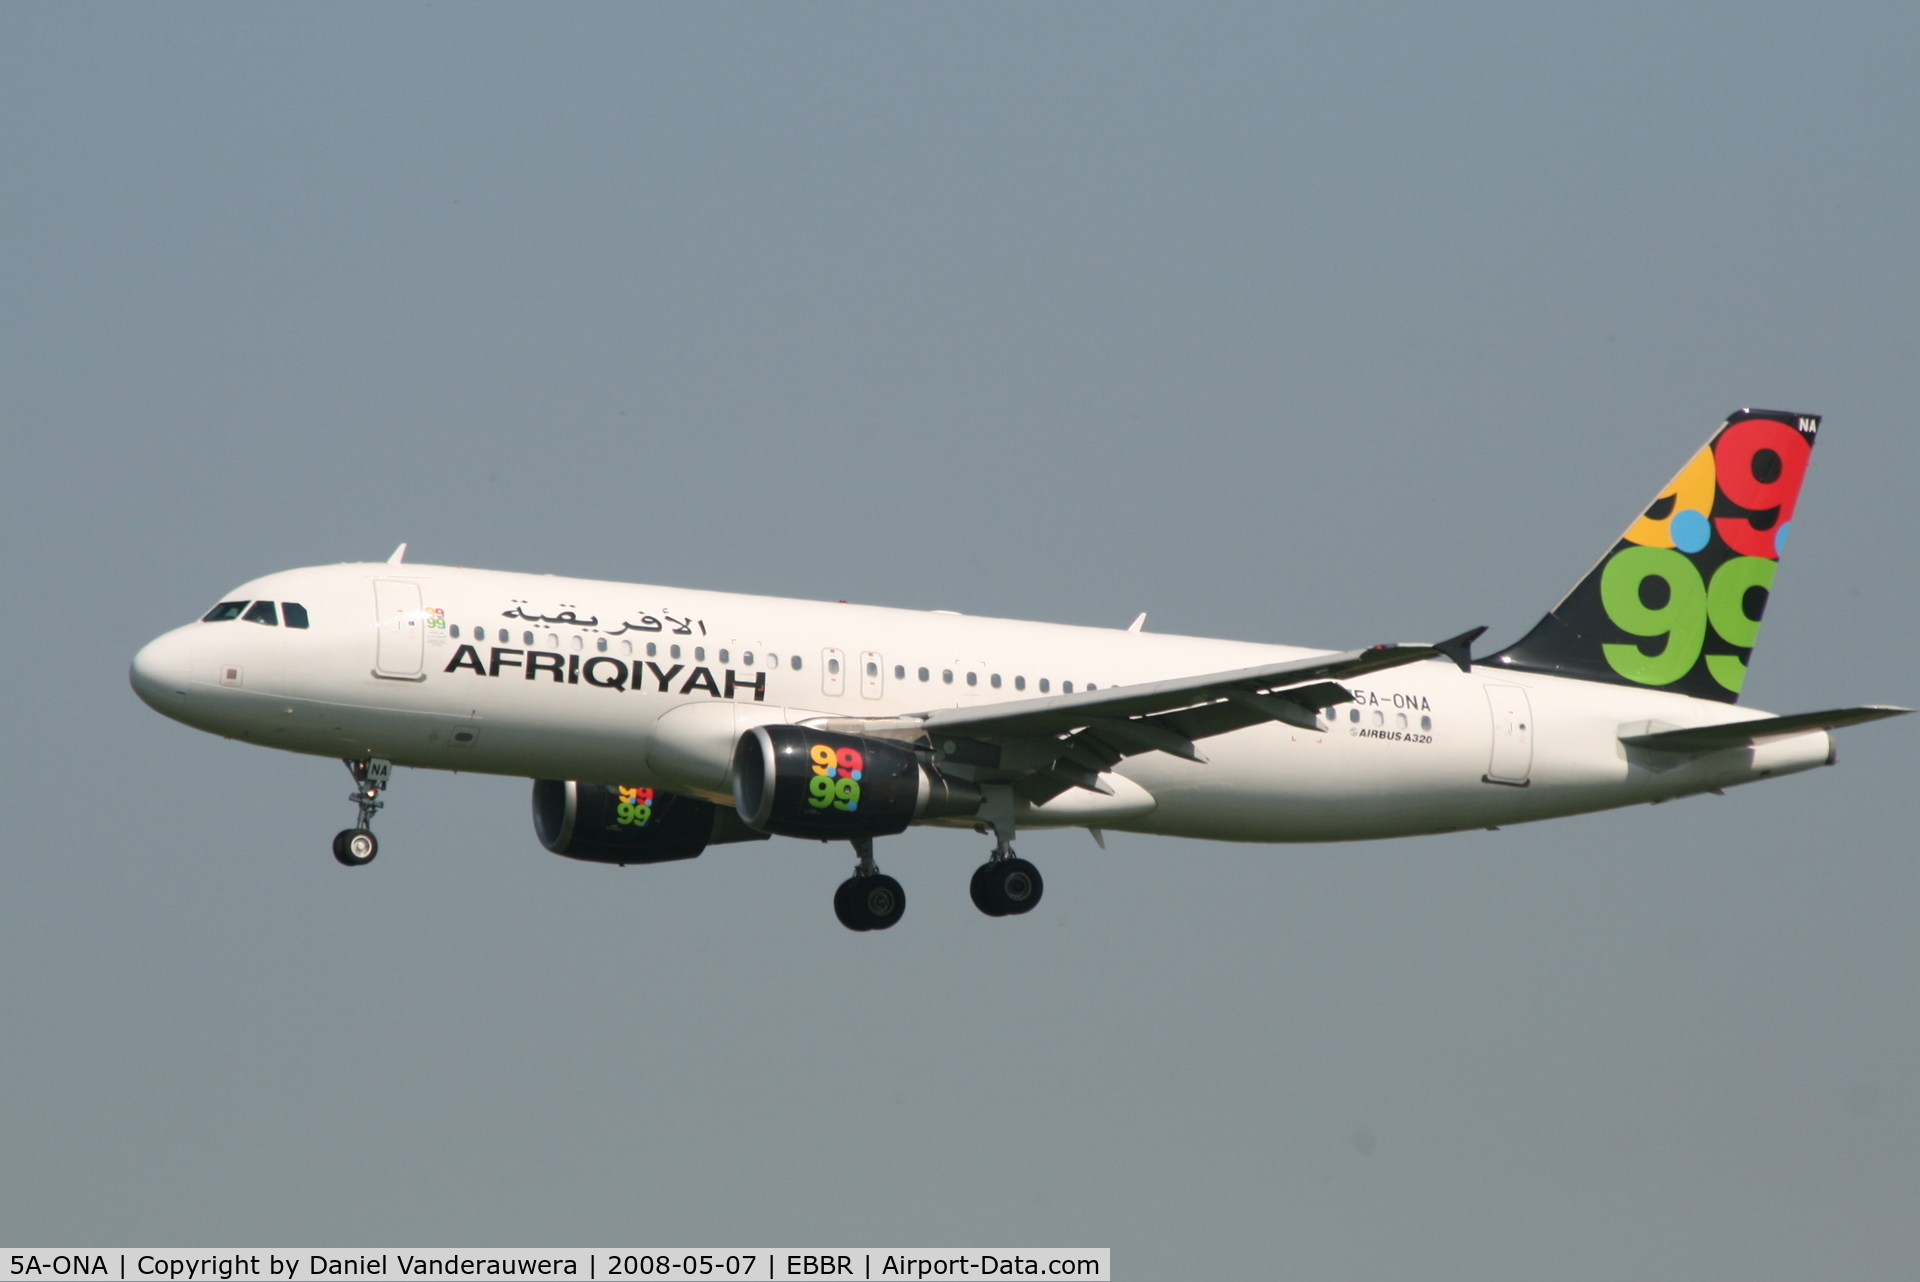 5A-ONA, 2007 Airbus A320-214 C/N 3224, arrival of flight 8U924 to rwy 25L